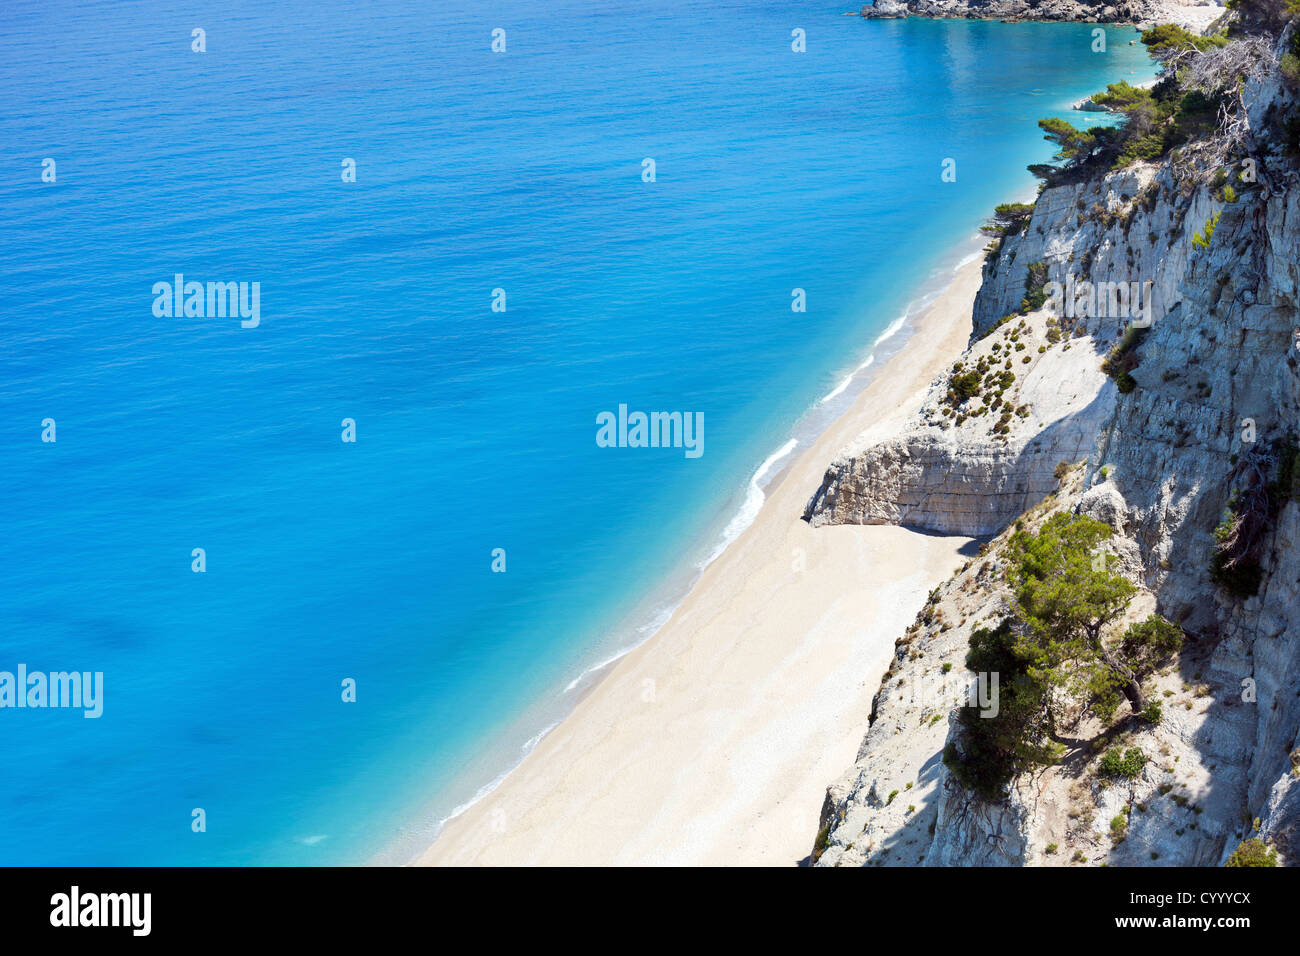 Beautiful summer white Egremni beach on Ionian Sea (Lefkada, Greece) summer view from nearest rock Stock Photo